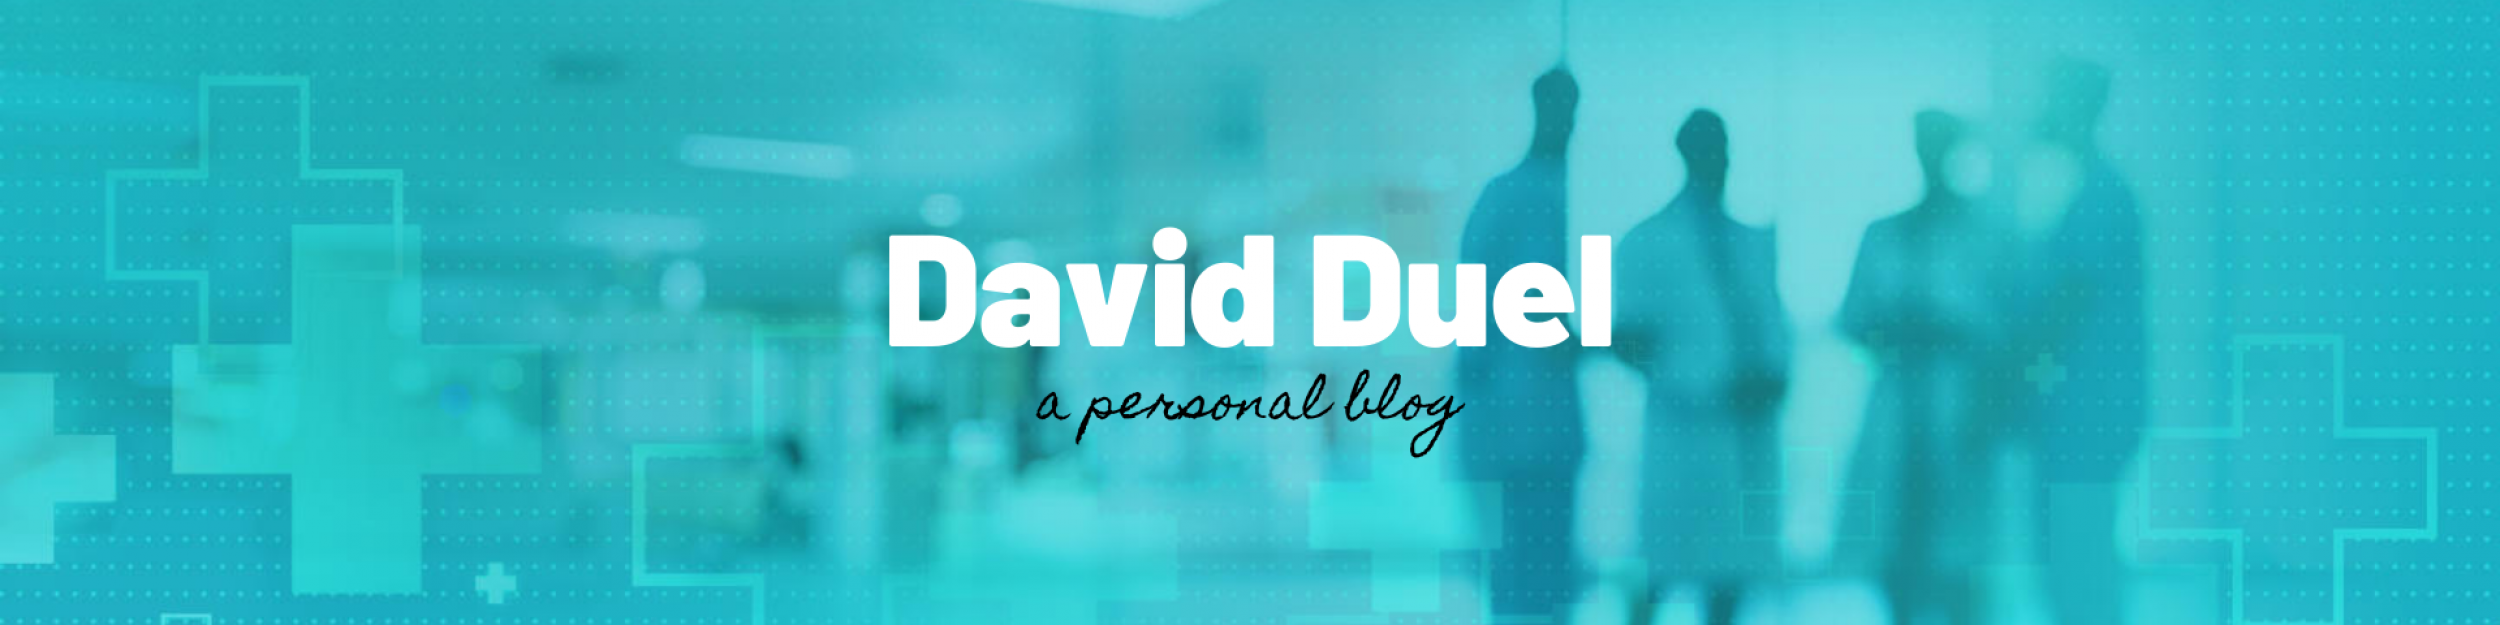 David Duel